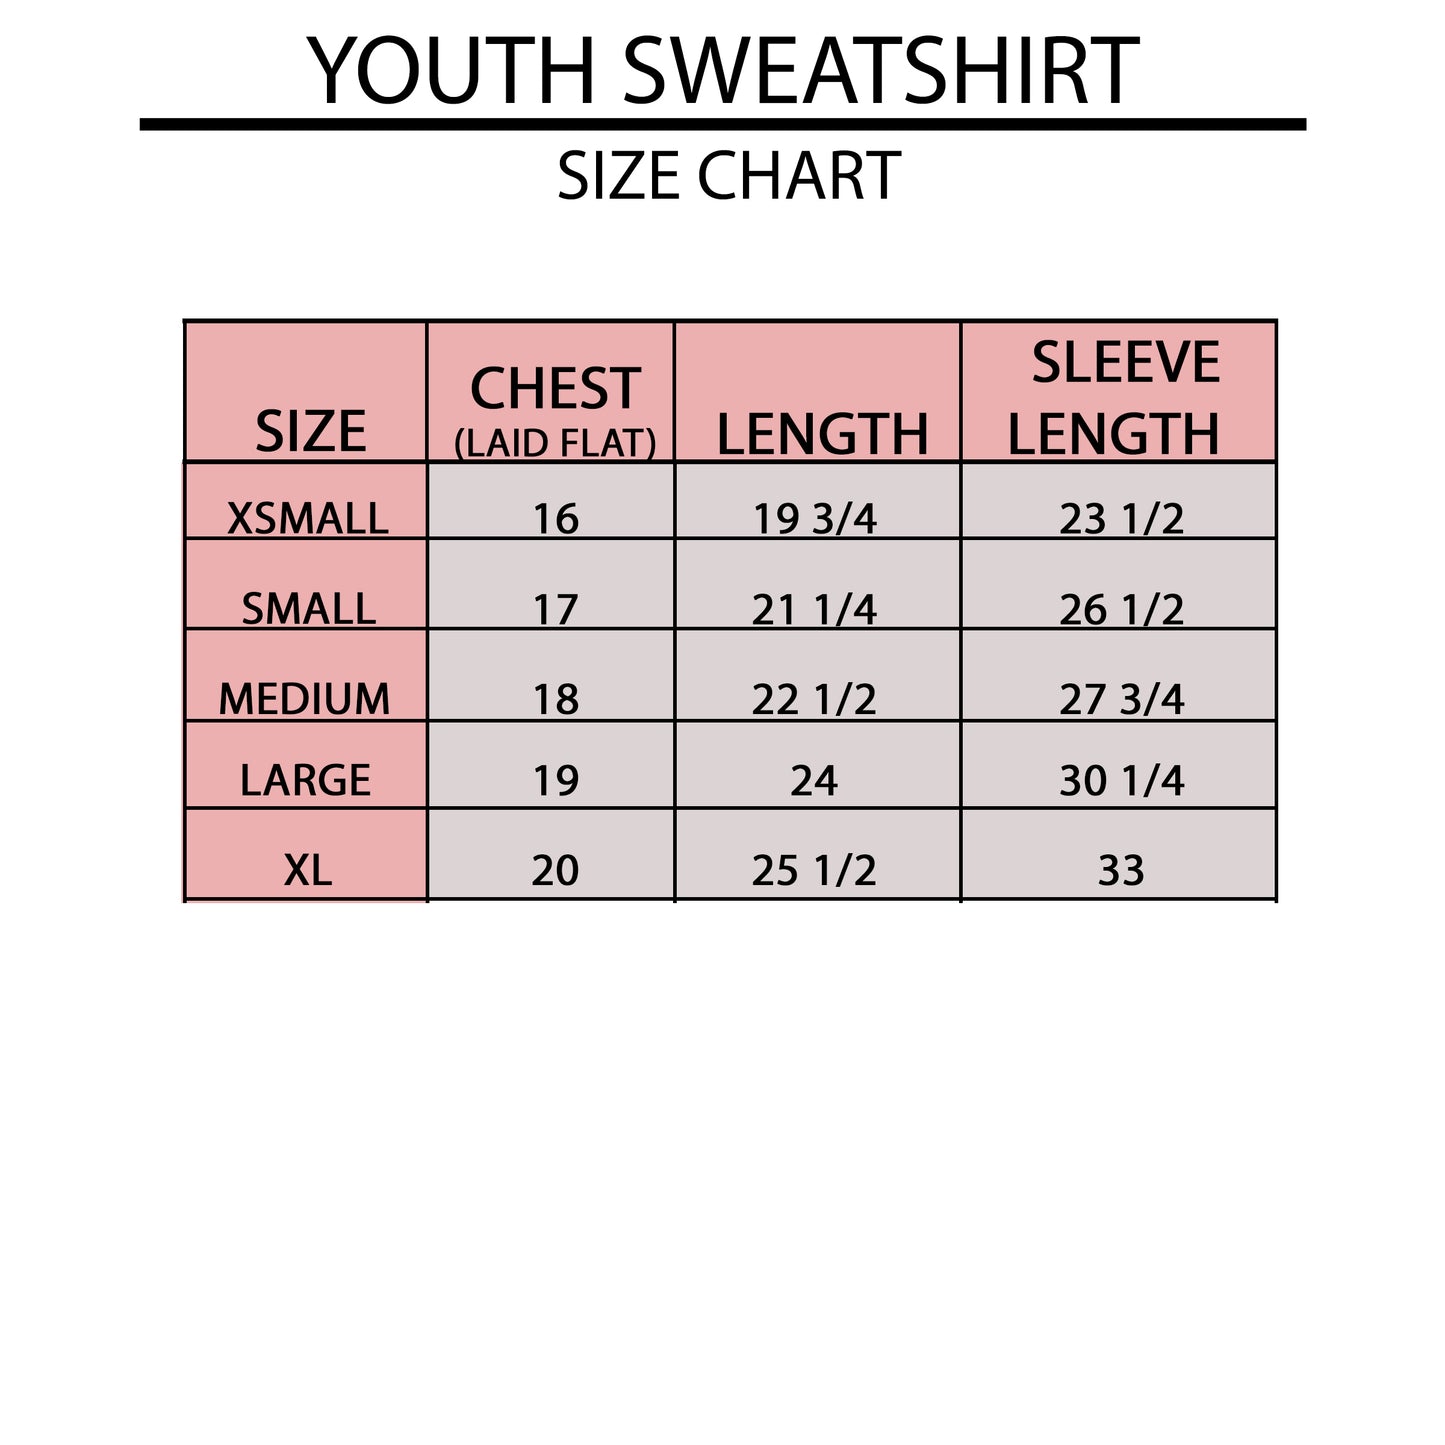 Can't Pinch This Shamrock | Youth Sweatshirt